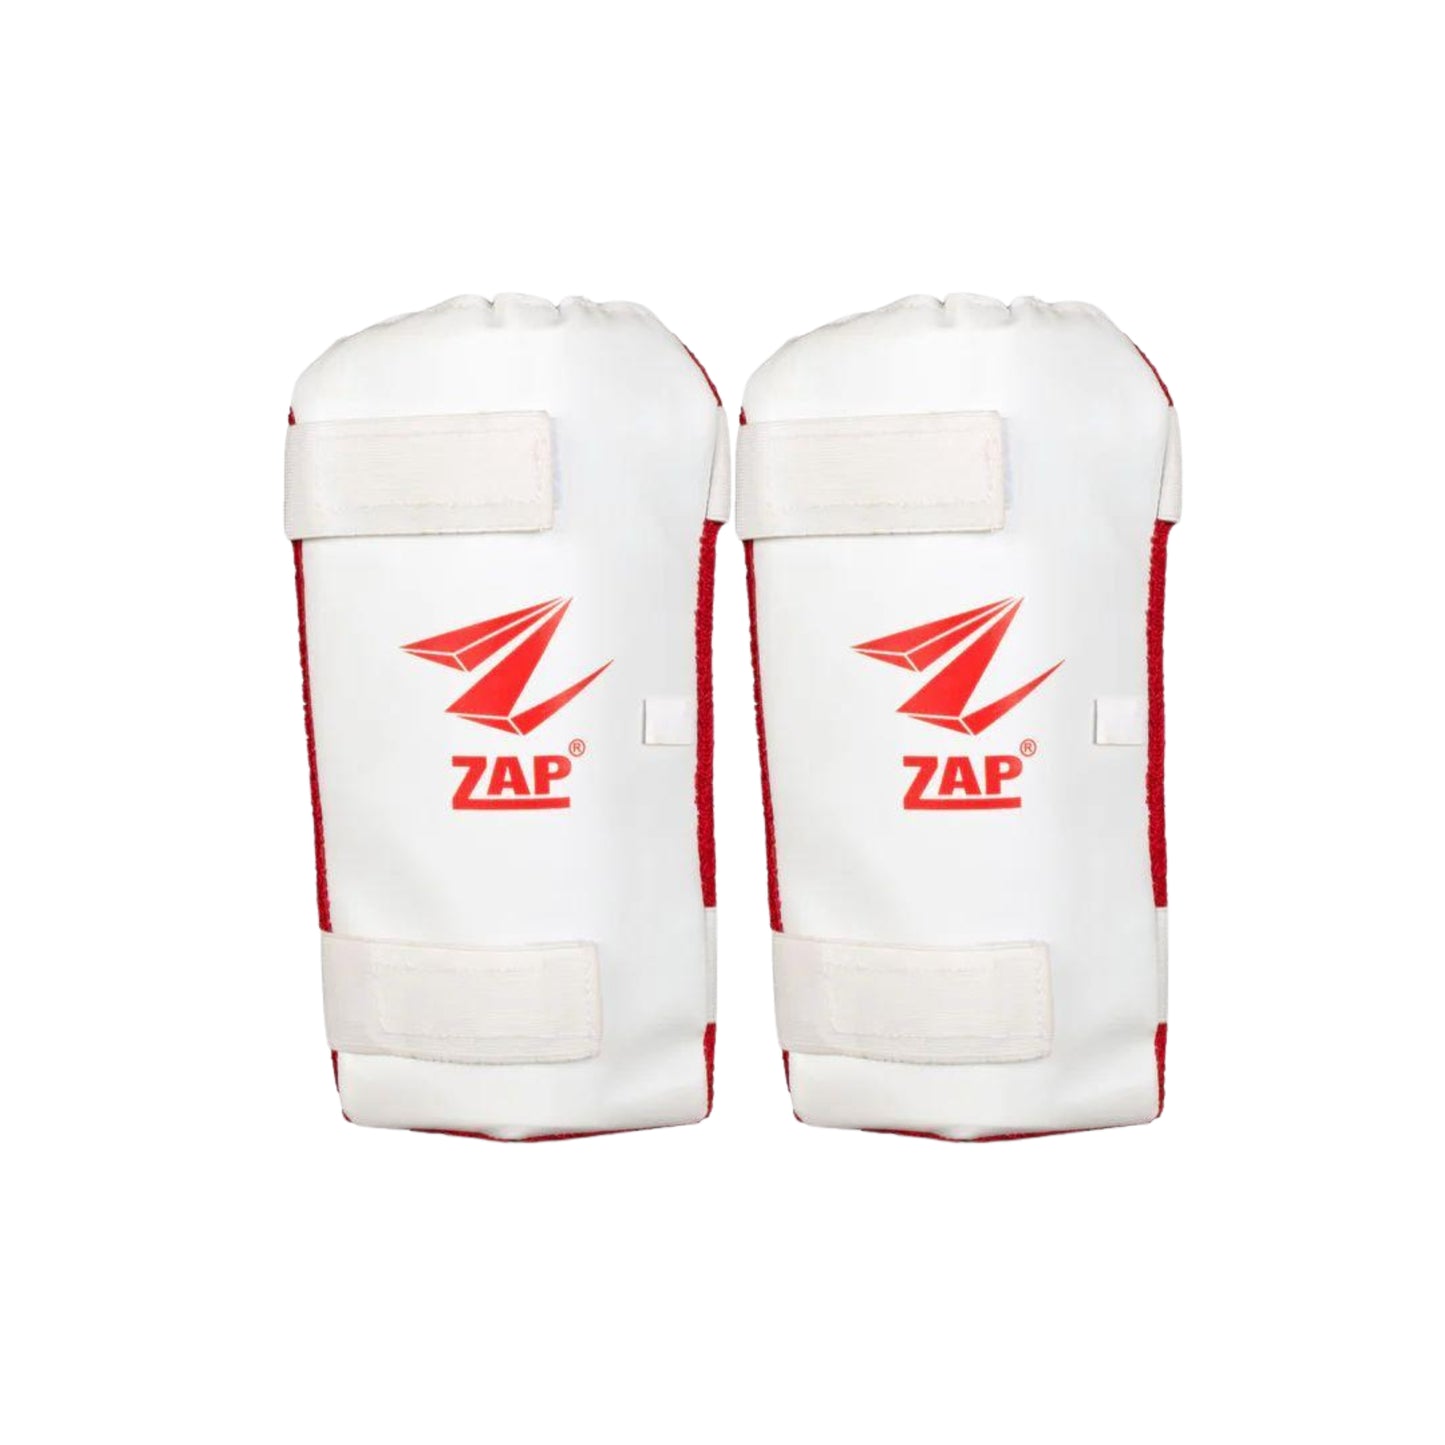 ZAP Junior Kashmir Willow Cricket Kit 8 pc Set with Accessories Size H, 6, 5, 4, 3, 2